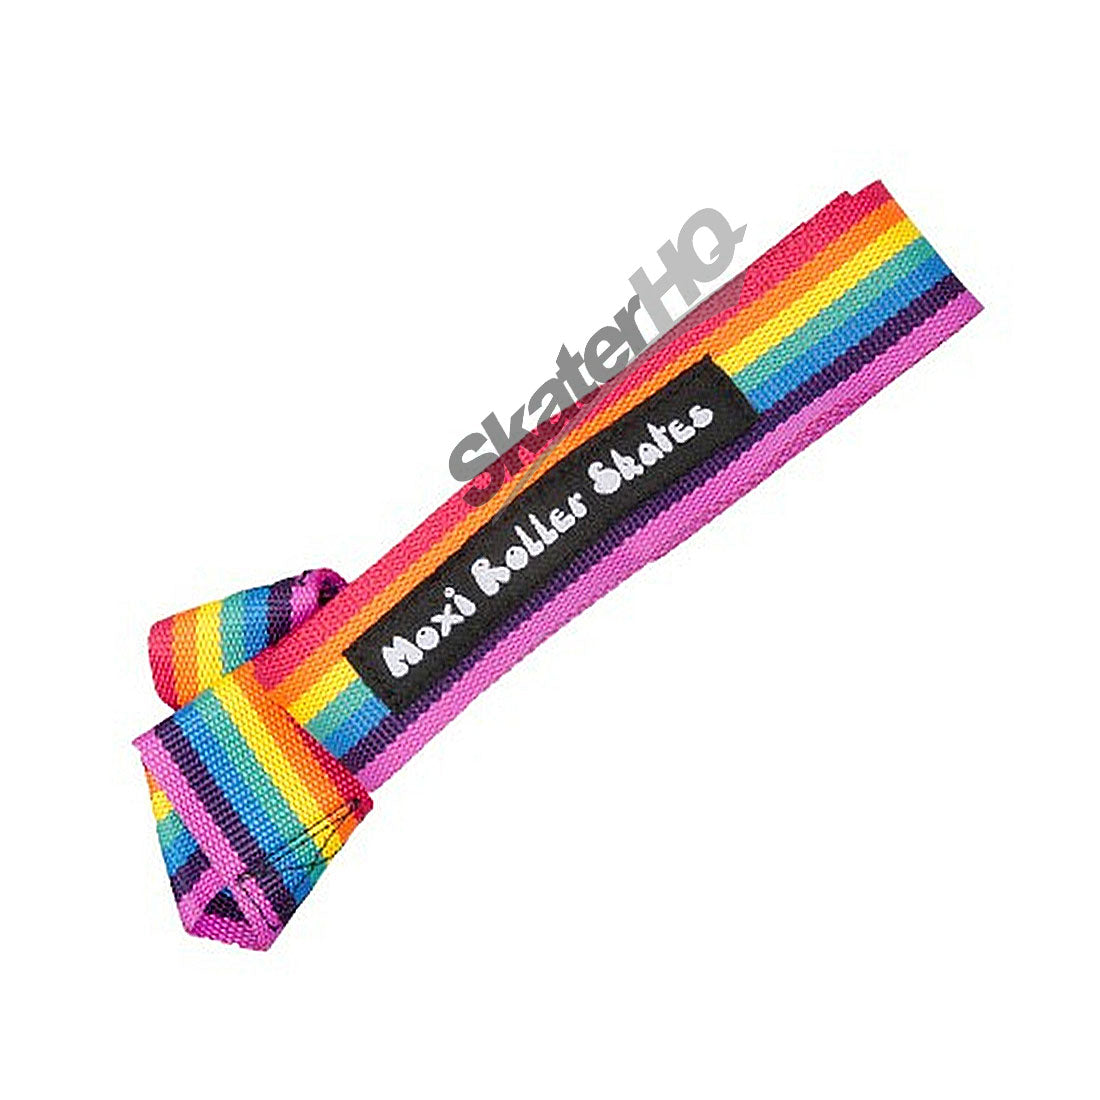 Moxi Skate Leash - Rainbow Roller Skate Accessories